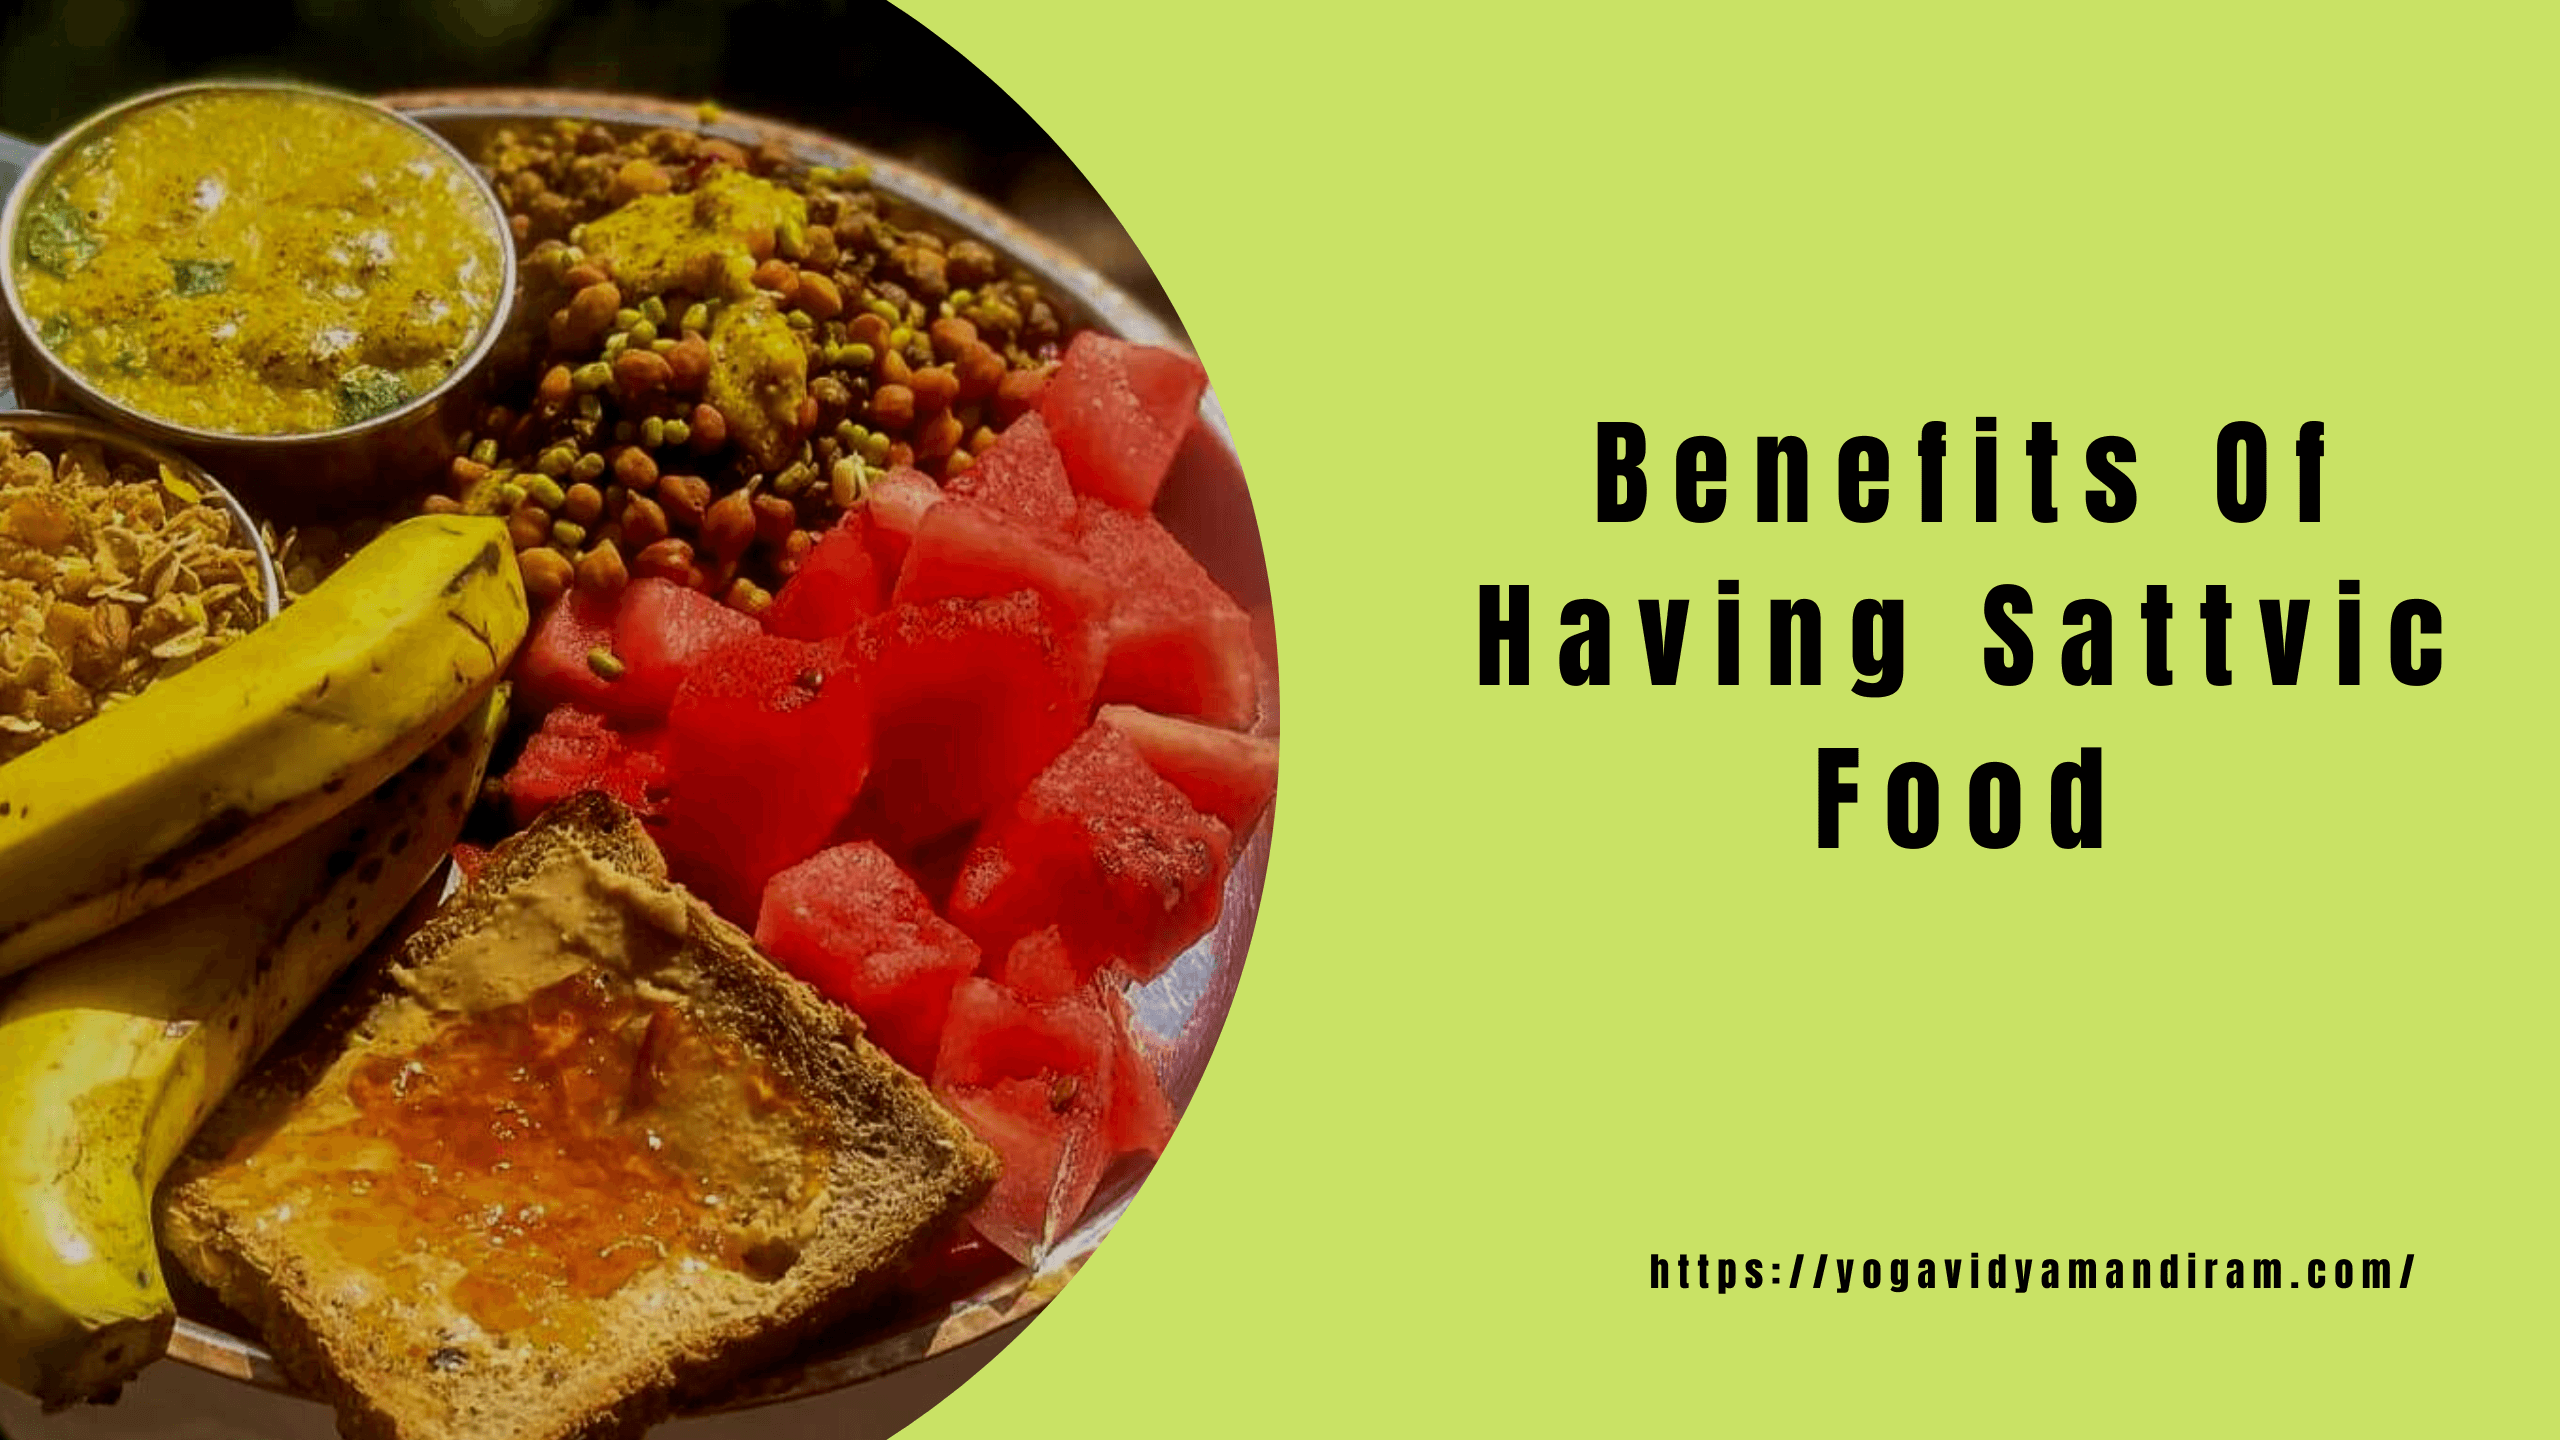 Benefits Of Having Sattvic Food